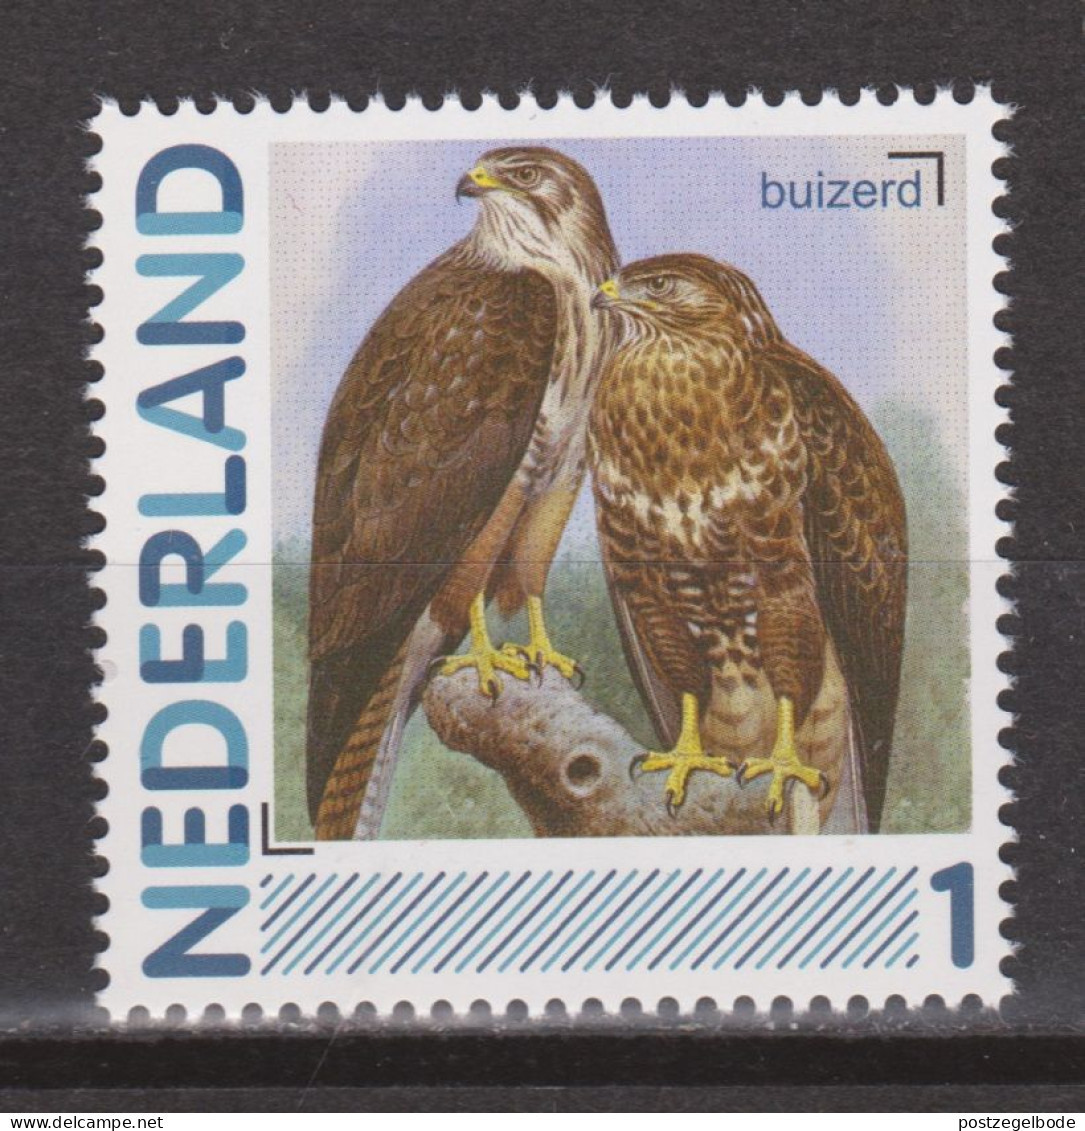 Nederland Netherlands Pays Bas MNH Roofvogel Oiseau De Proie Ave De Rapina Bird Of Prey Buizerd Buzzard Buse Ratonero - Arends & Roofvogels